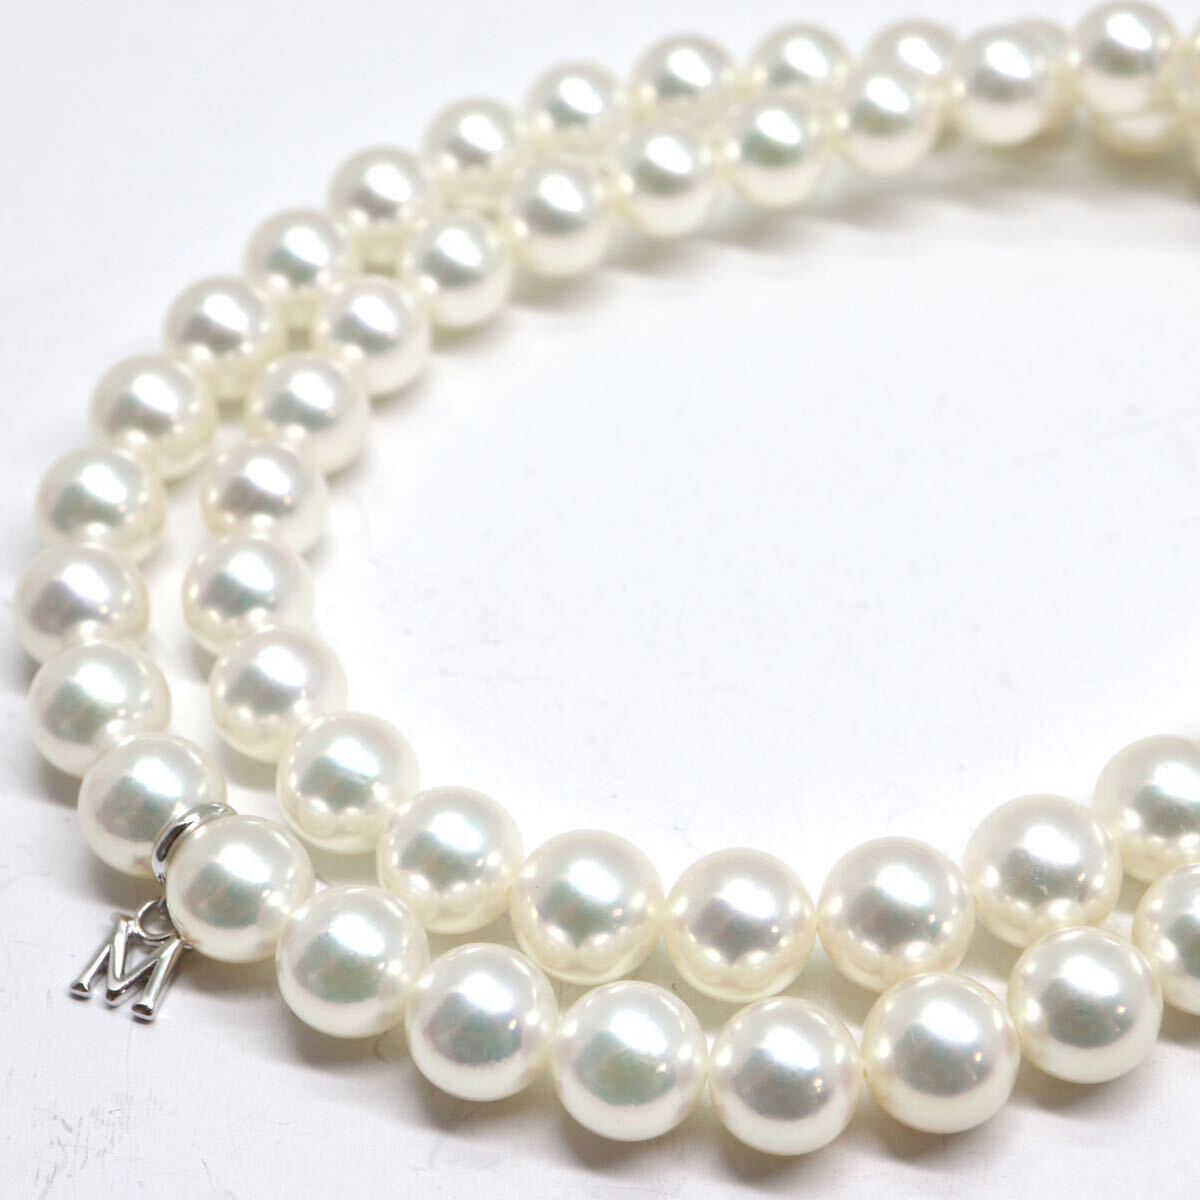 MIKIMOTO(ミキモト)箱/Mチャーム付き!!良質!!《アコヤ本真珠ネックレス》M 約7.0-7.5mm珠 33.0g 約42.5cm pearl necklace jewelry FA5/FB0の画像6